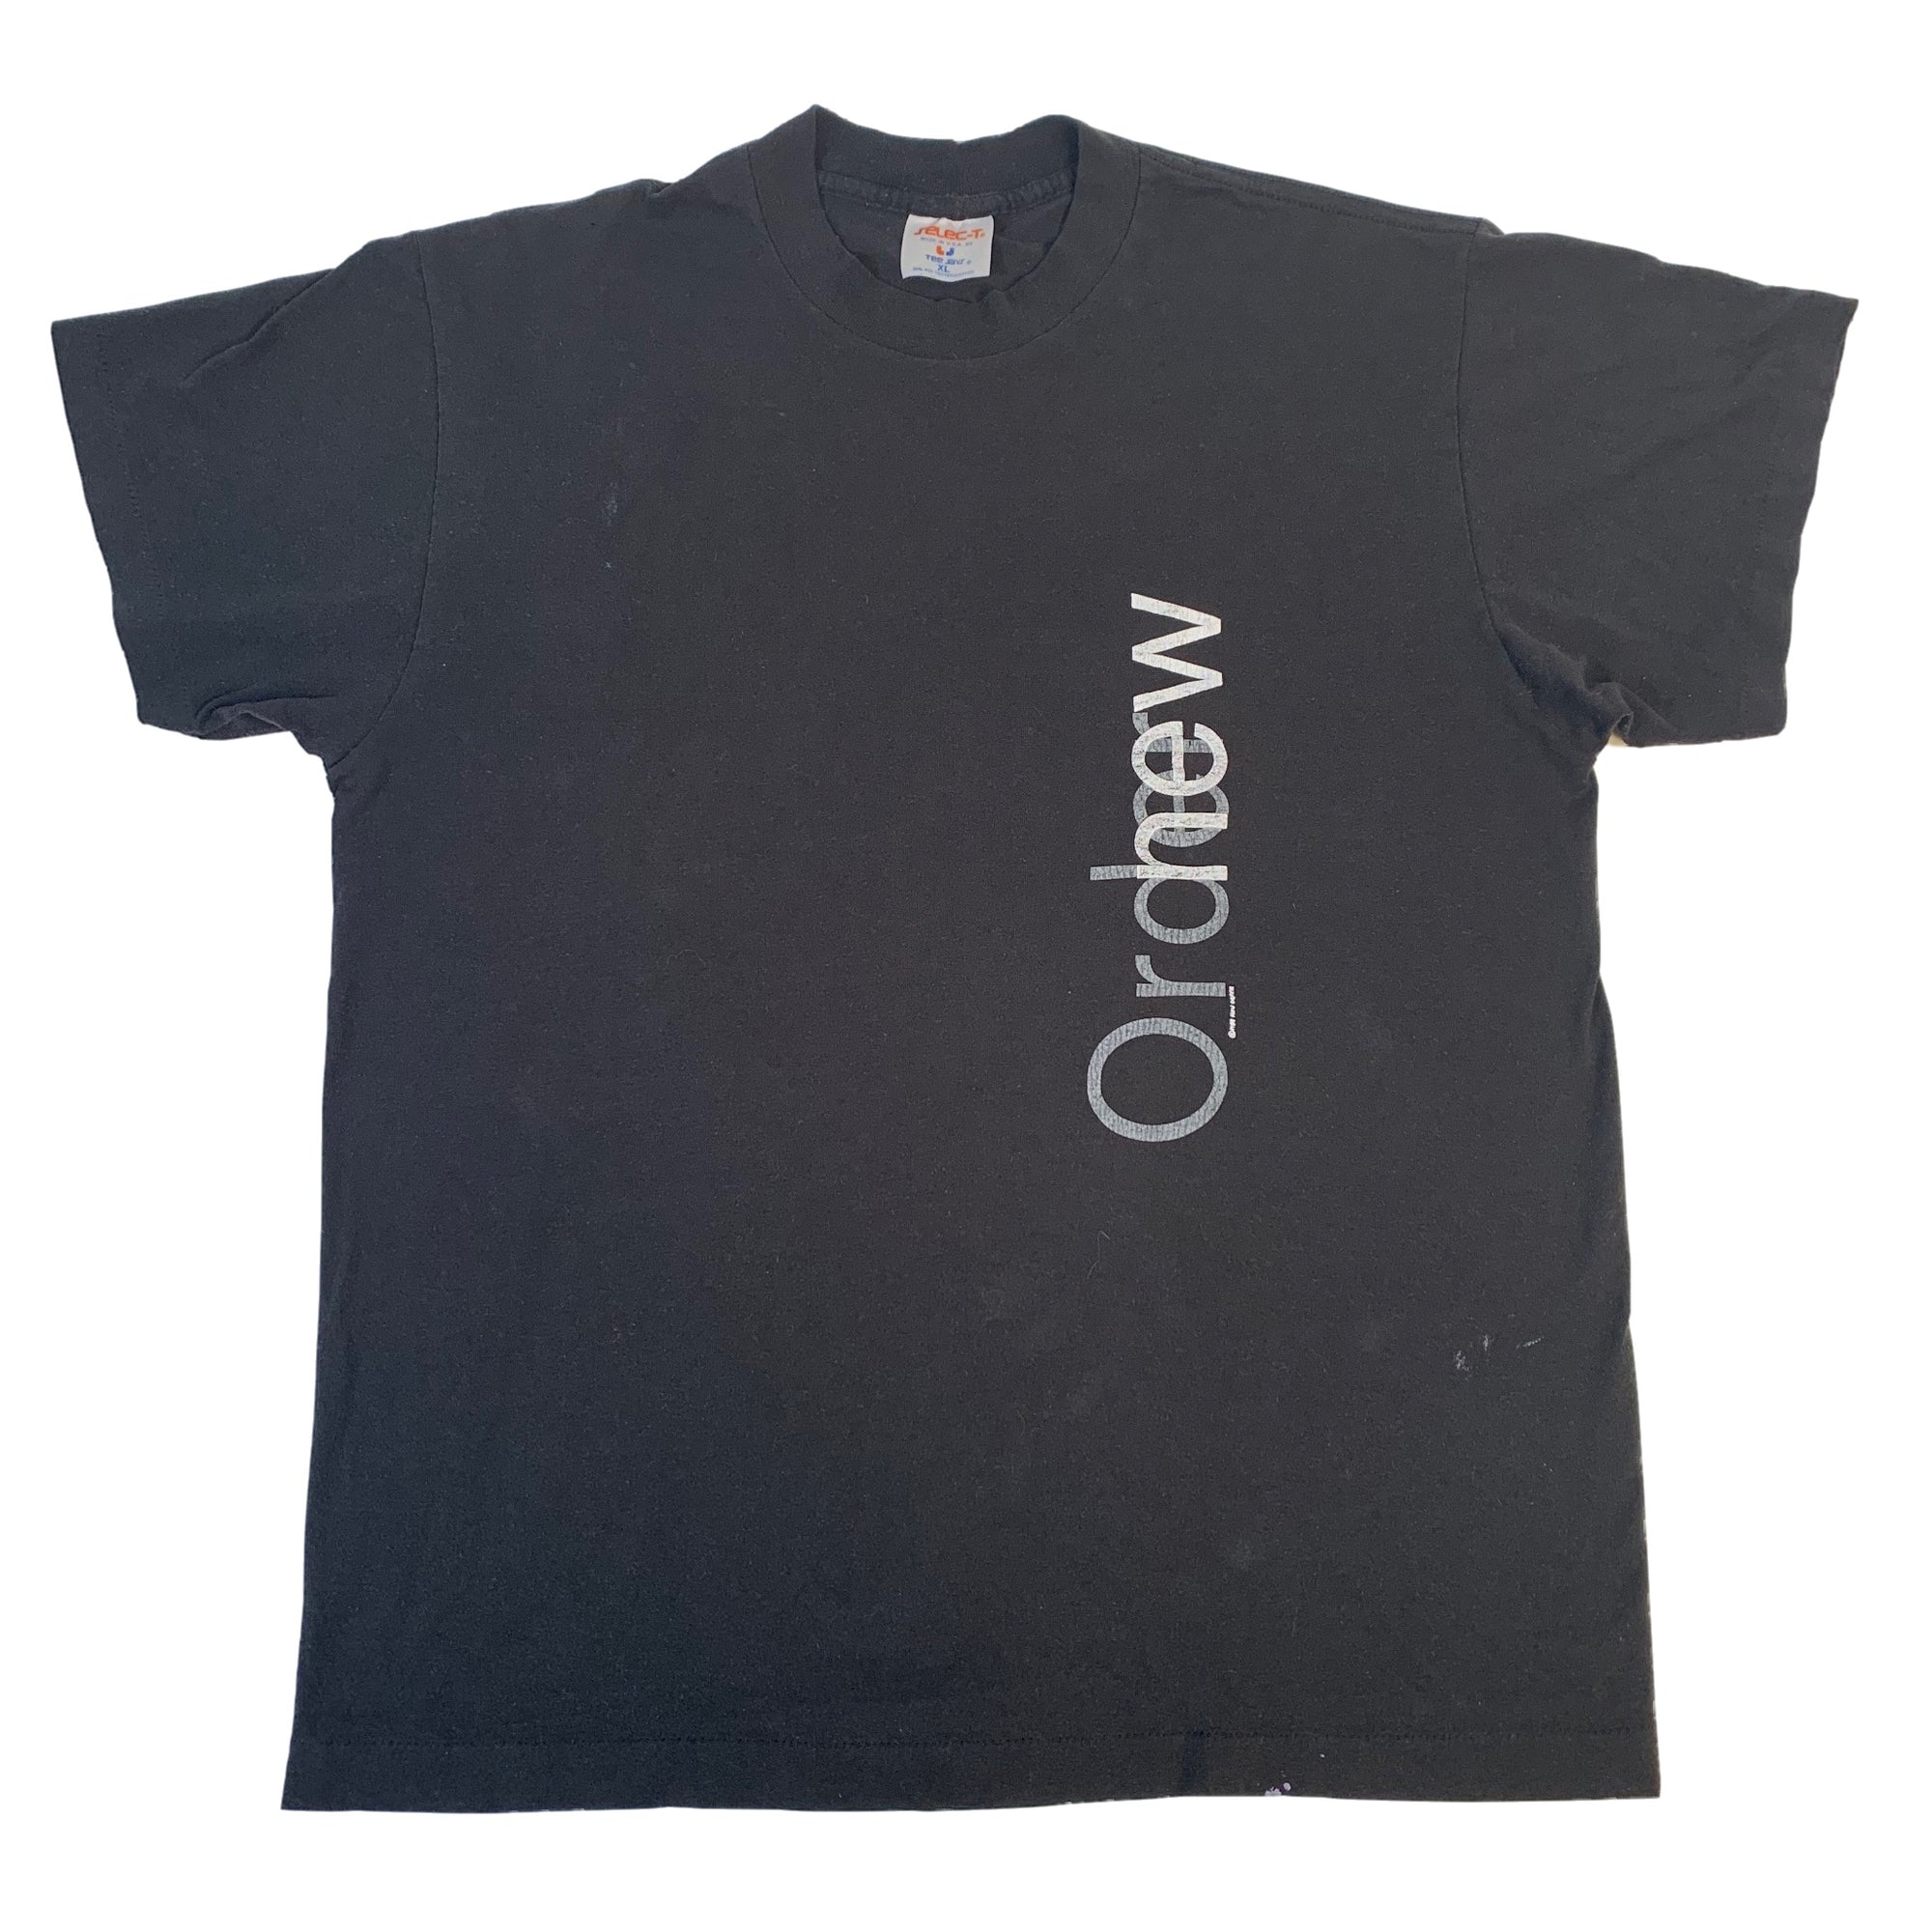 Vintage New Order "1988" T-Shirt - jointcustodydc